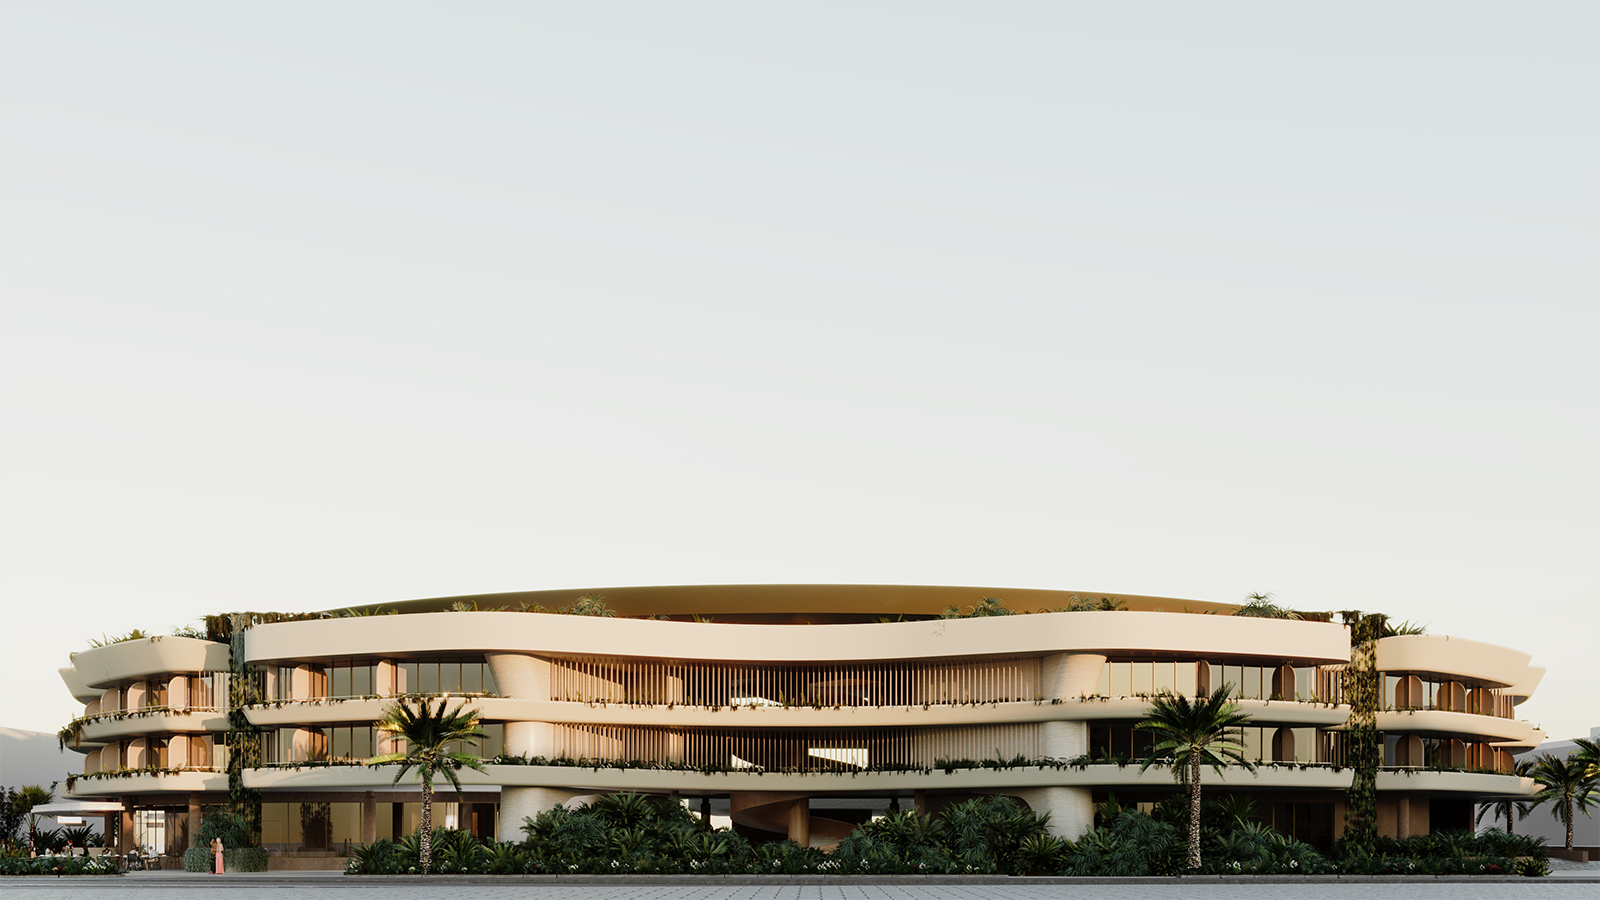 The Ritz-Carlton Gold Coast